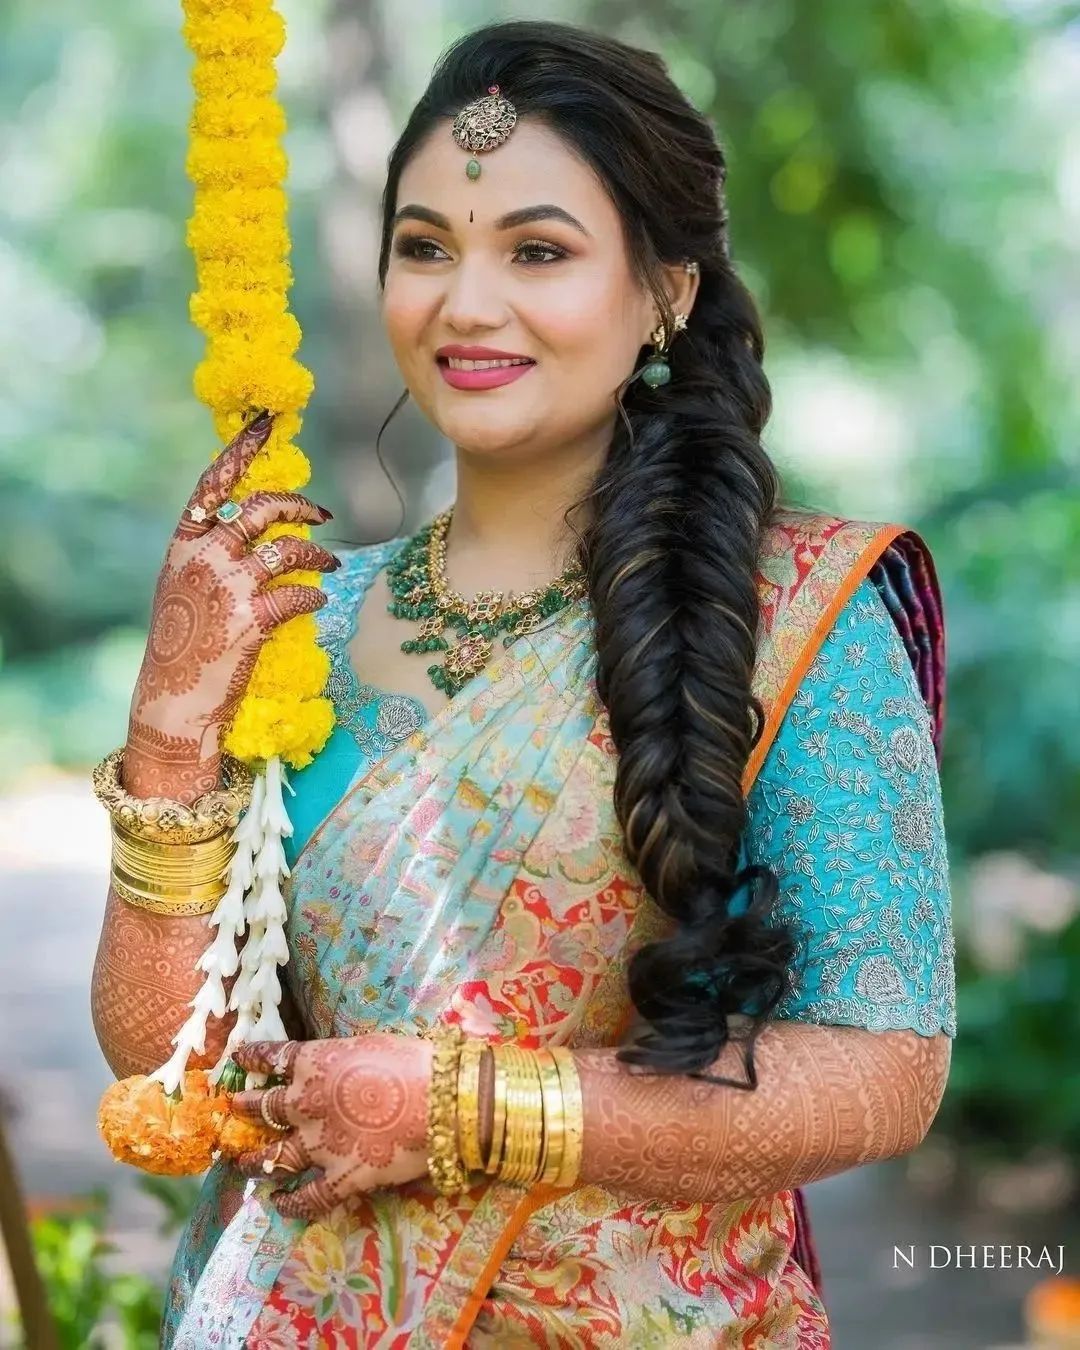 Bridal Hair & Makeup Services | Kerala hindu Engagement makeover  @_brahma_007 @santhoshjoji For bridal booking plz do contact 7594821432  #happybrides#happymakeuparti... | Instagram